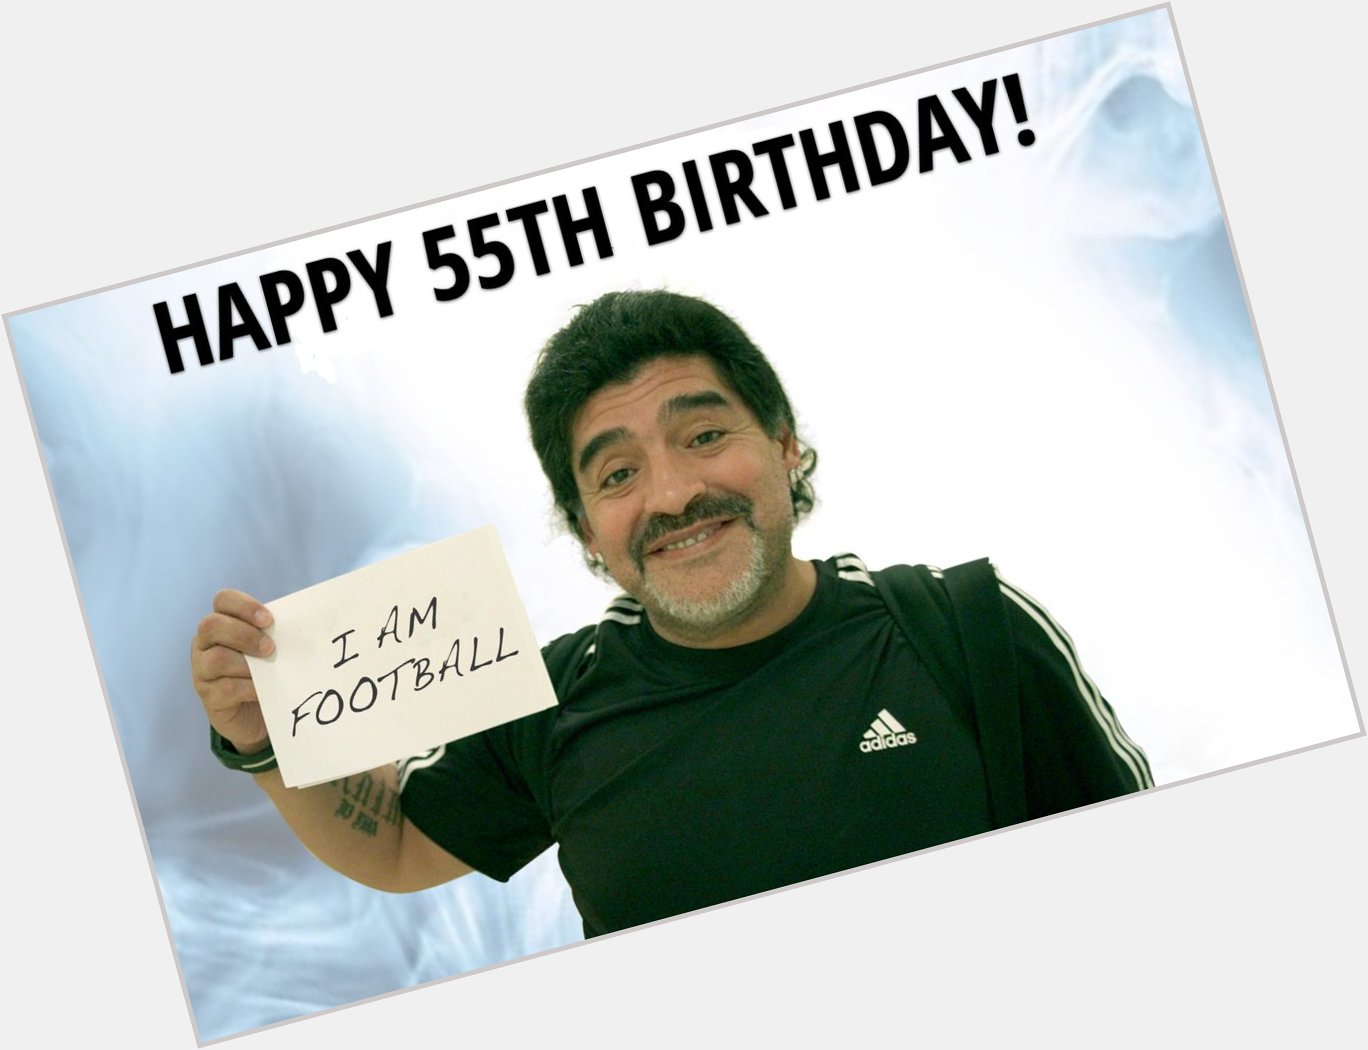 Argentina legend Diego Maradona turns 55 today. Happy birthday! 